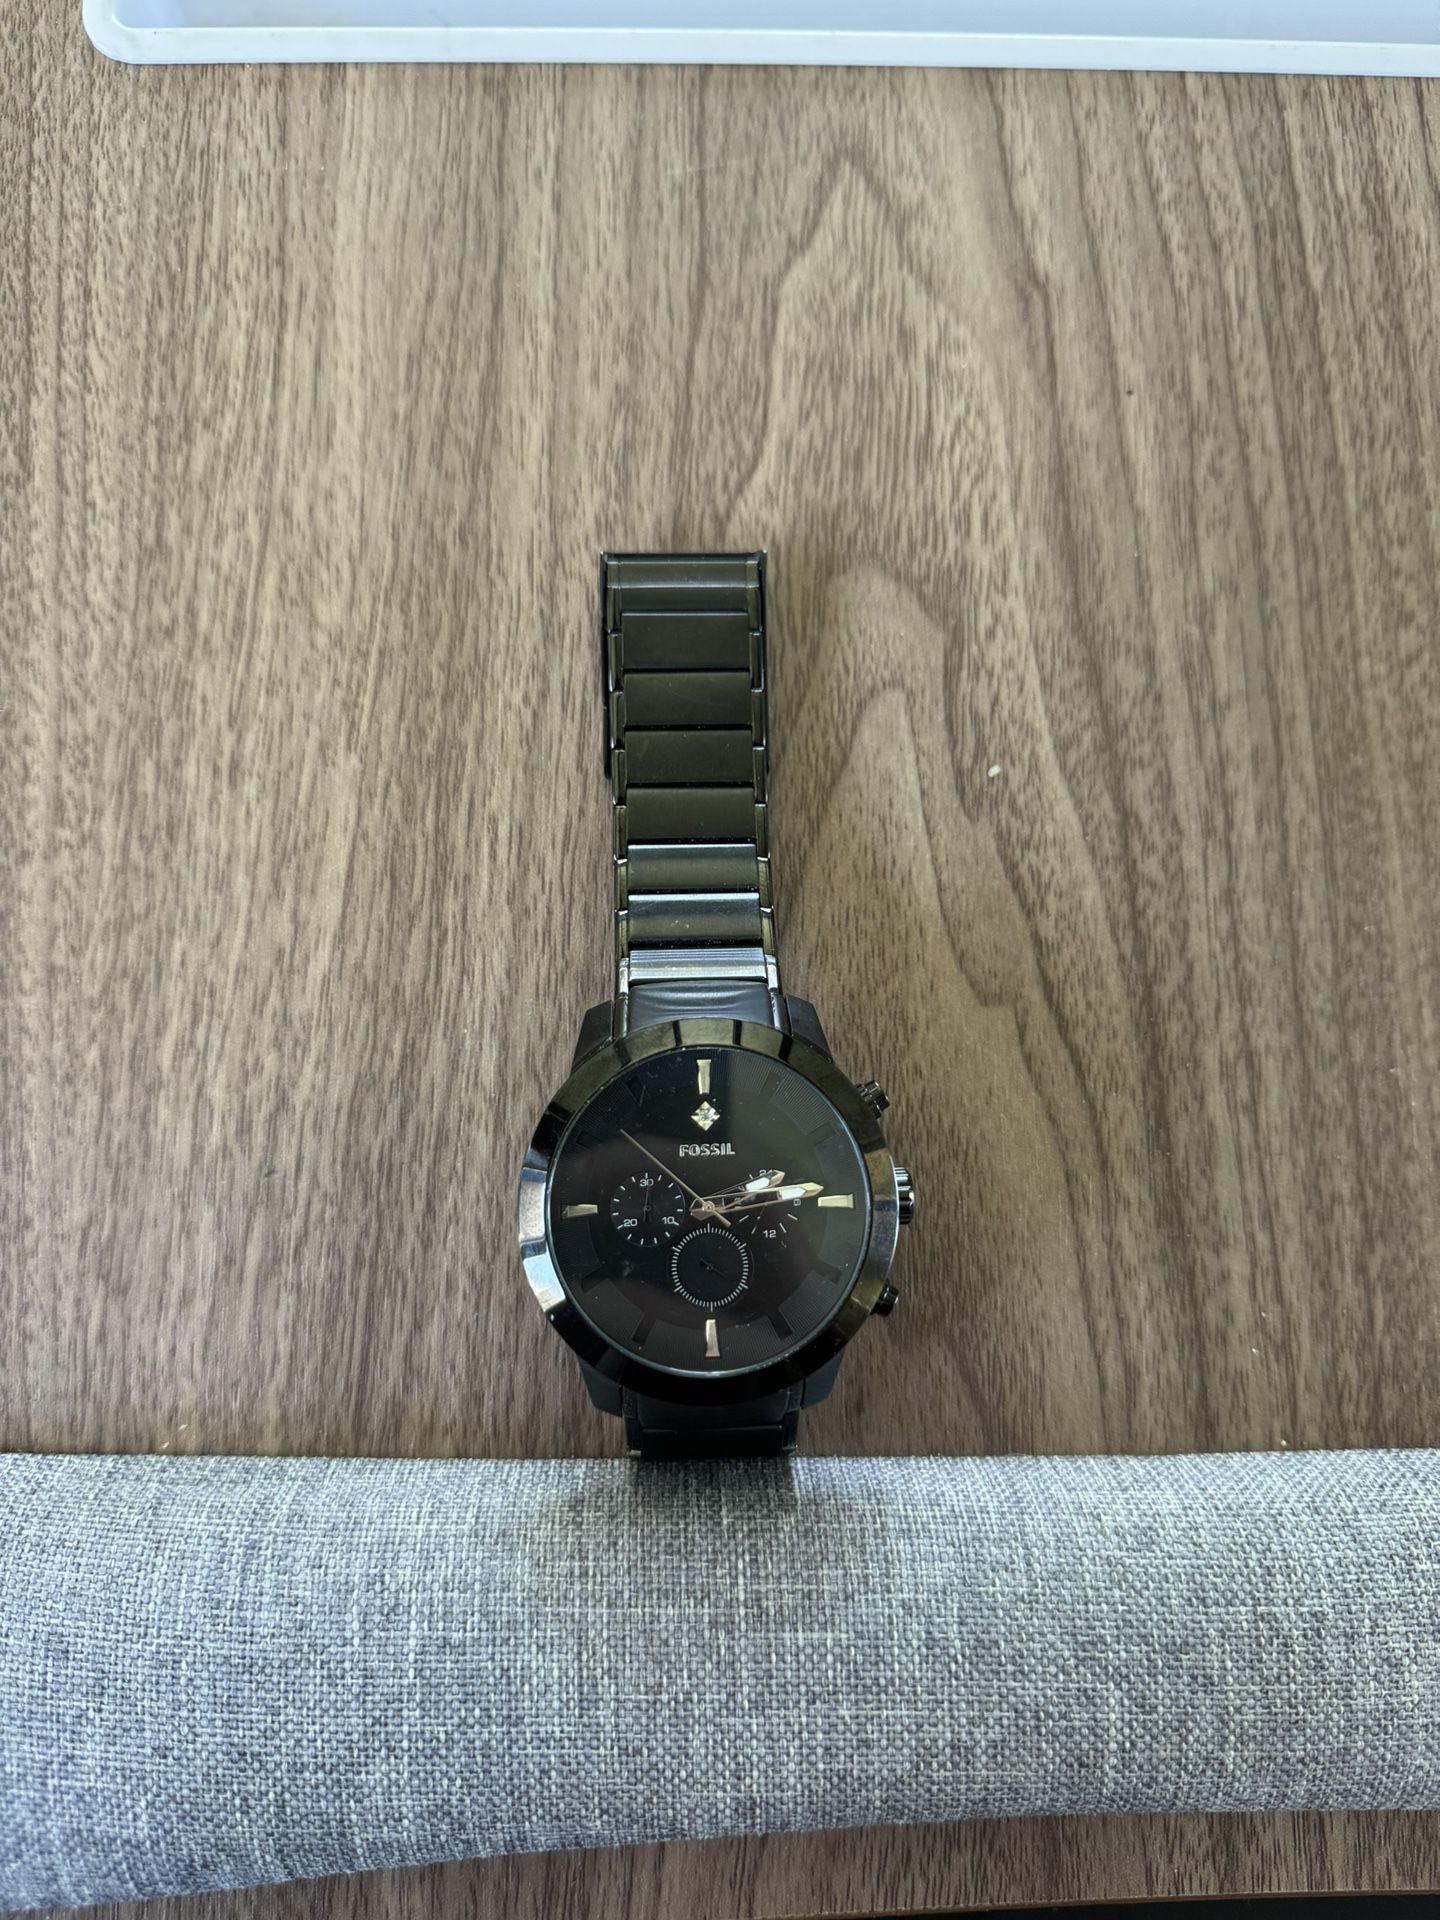 Men's Fossil FS-4531 Black Chronograph Dress Watch